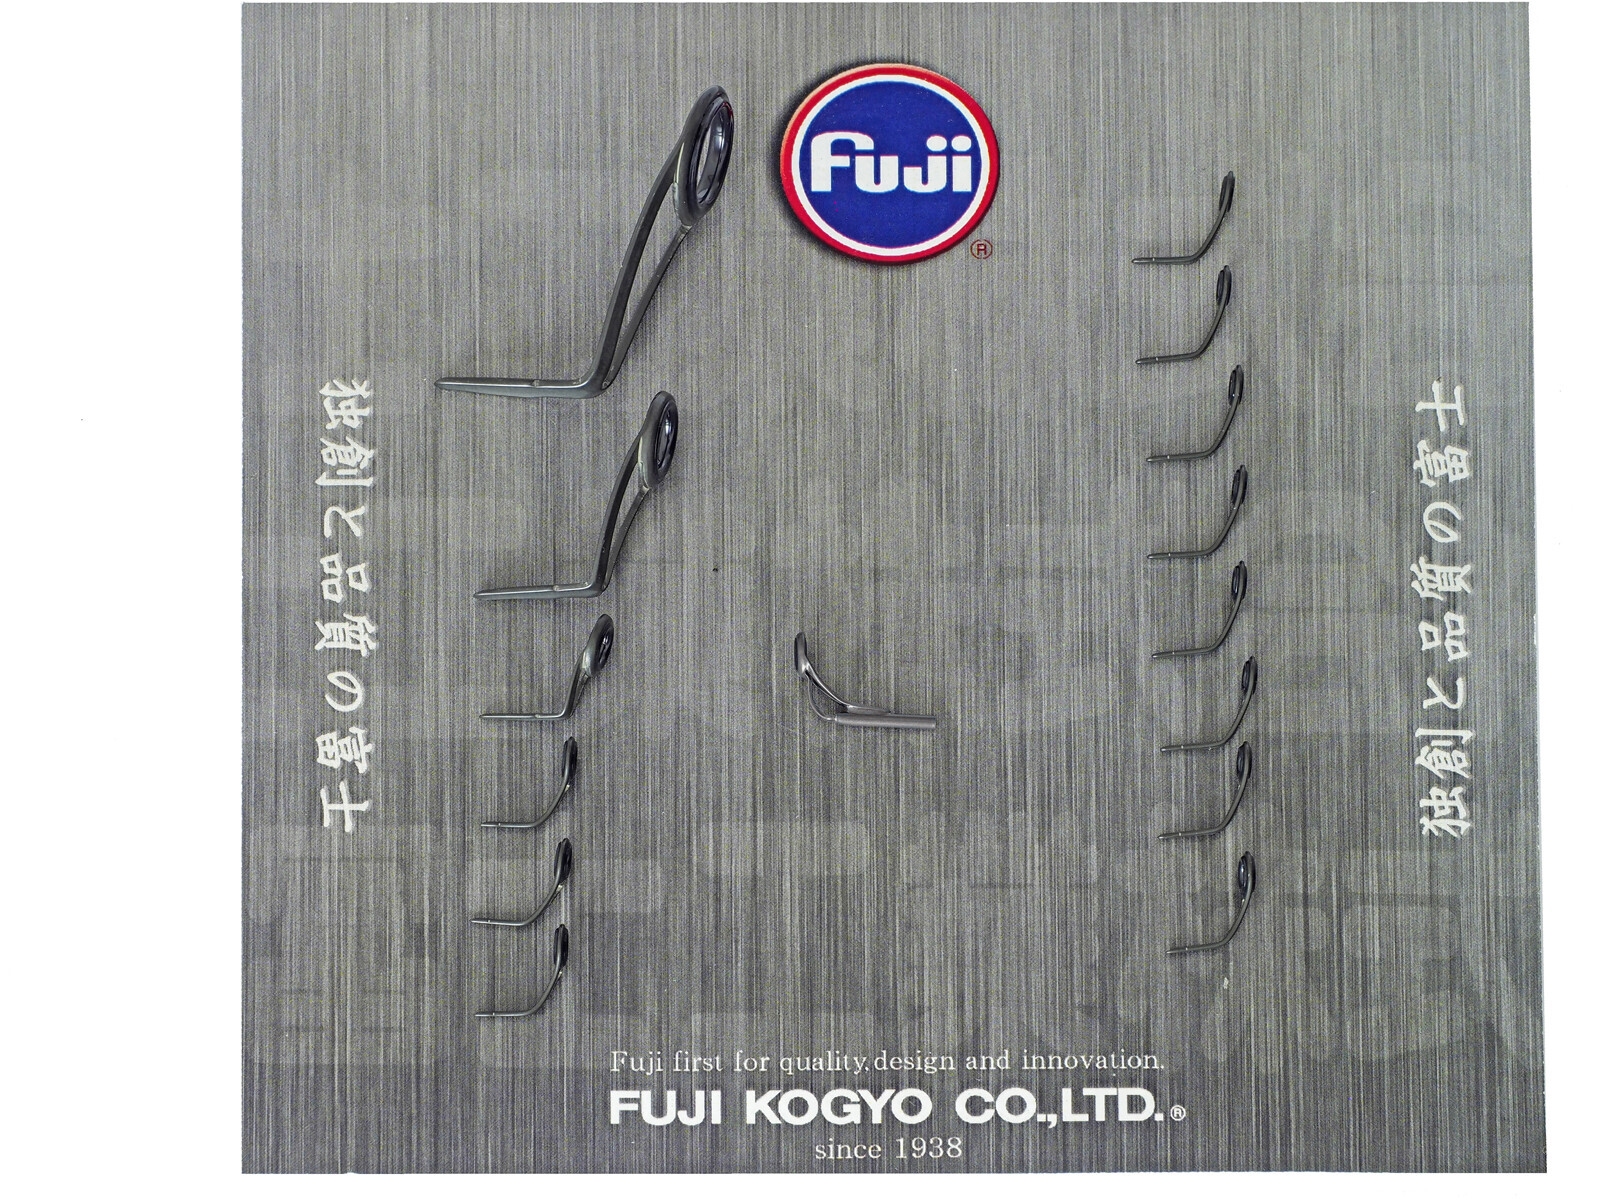 Fuji match guide set - Rod Guide Sets - Rod Kits & Ring Sets